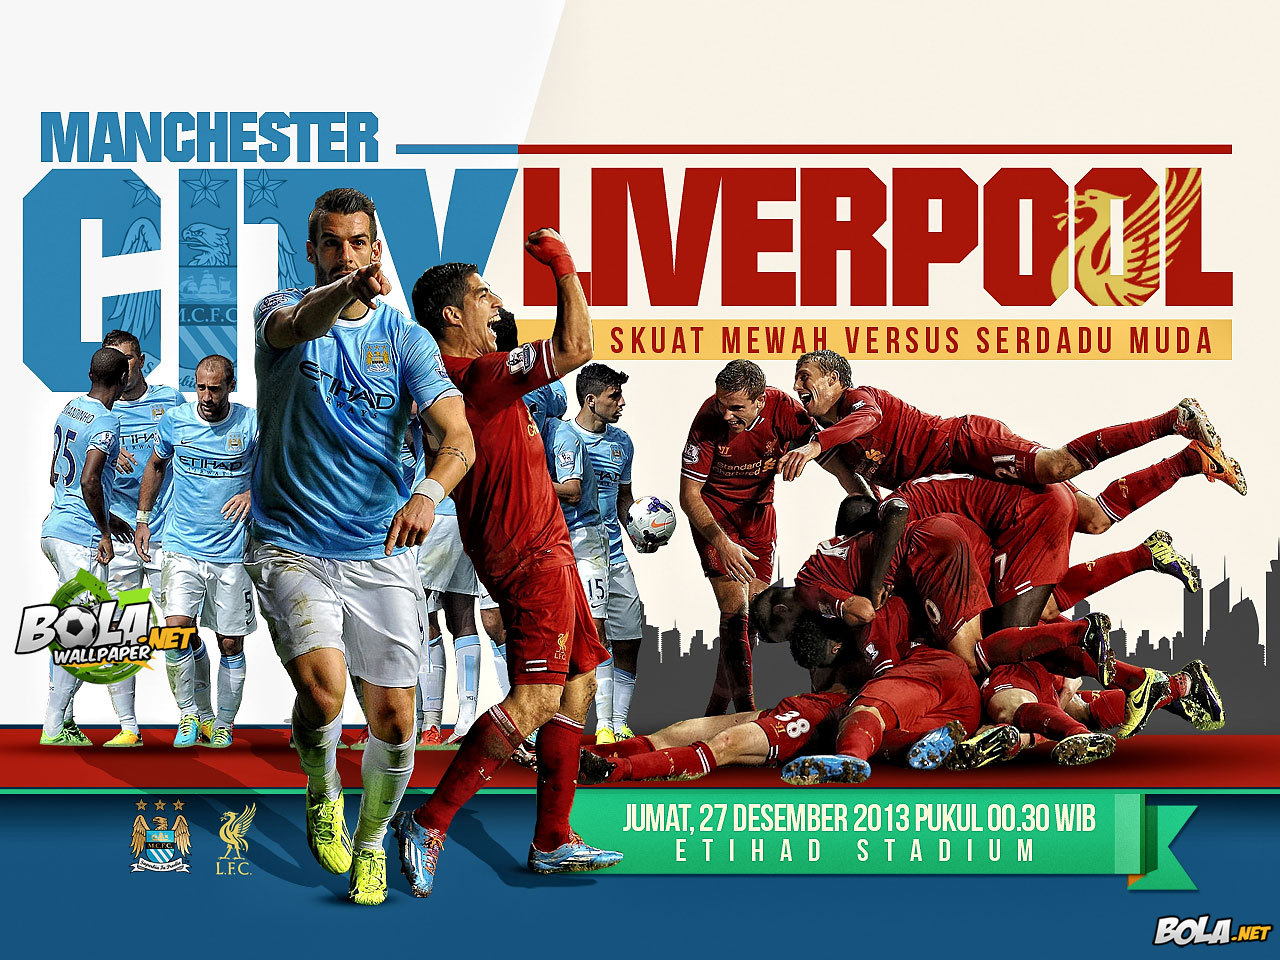 Download Wallpaper Manchester City Vs Liverpool Bolanet